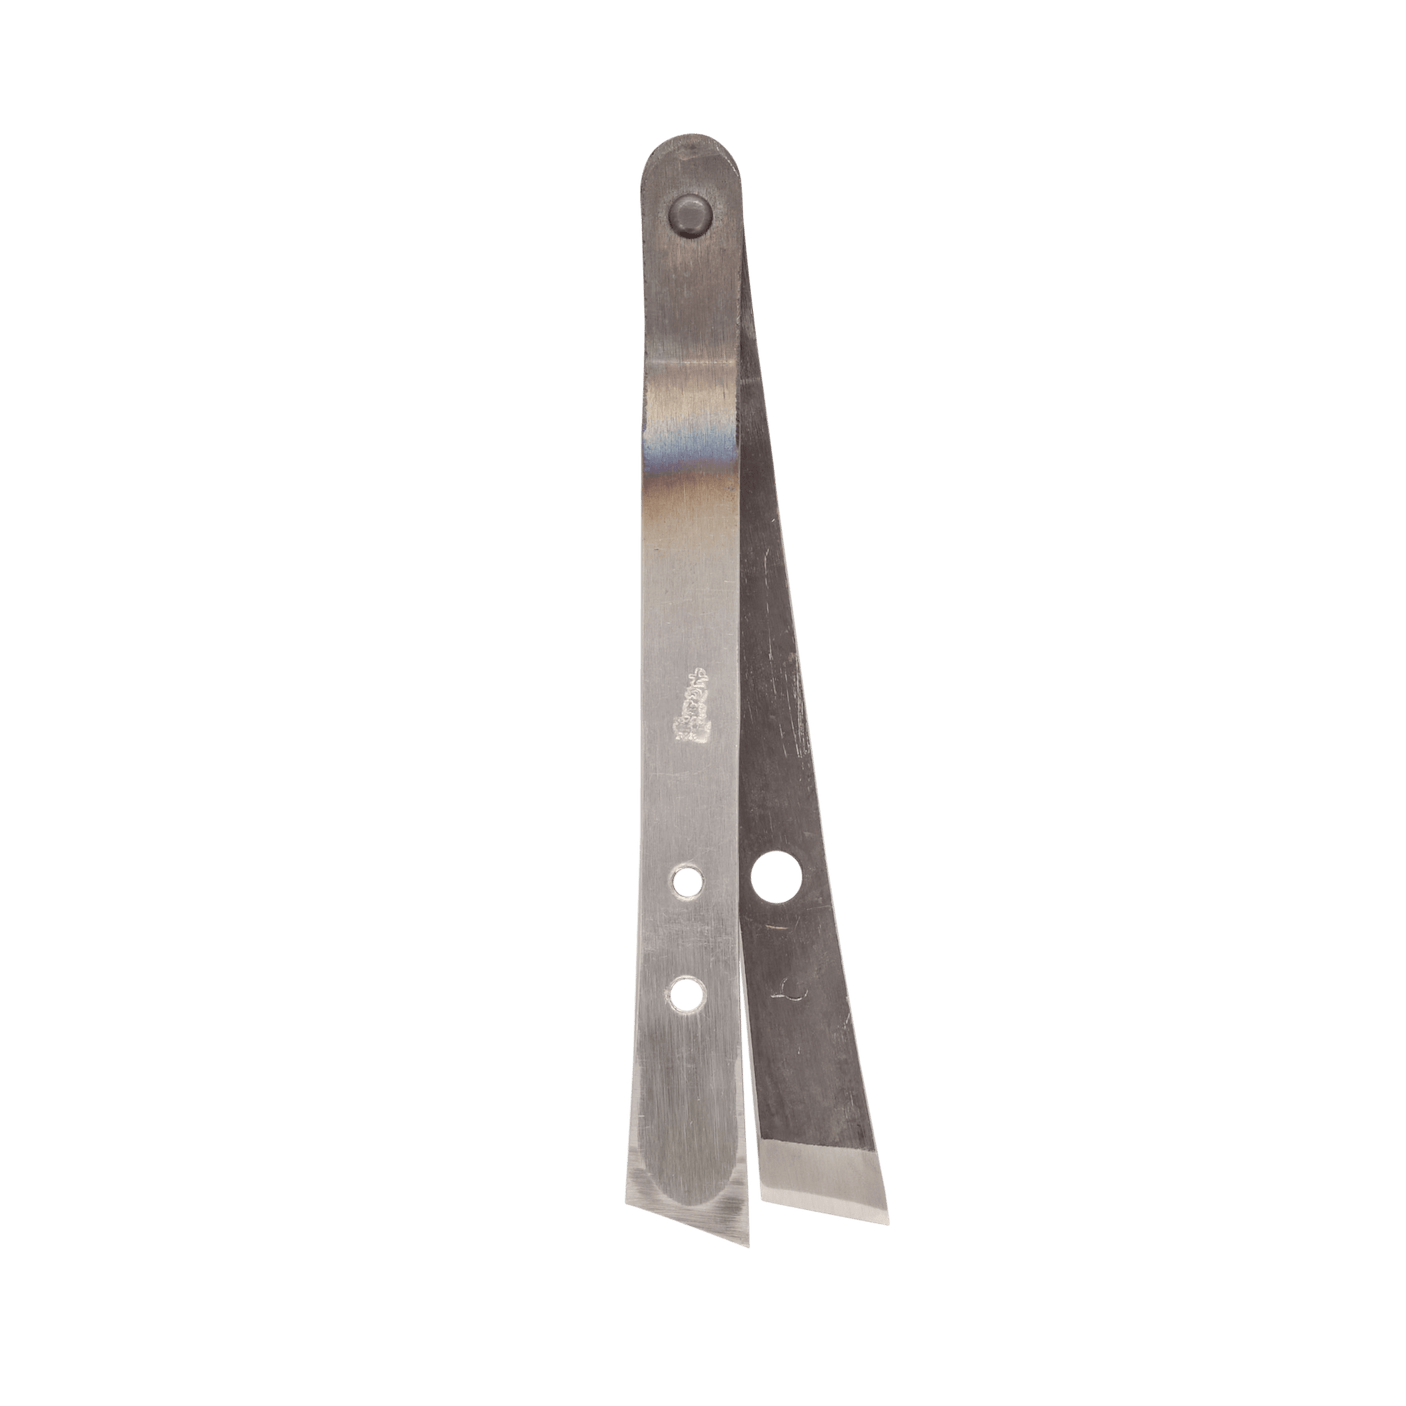 Baishinshi Double Marking Knife - 2 Screws - Marking Knives - Japanese Tools Australia